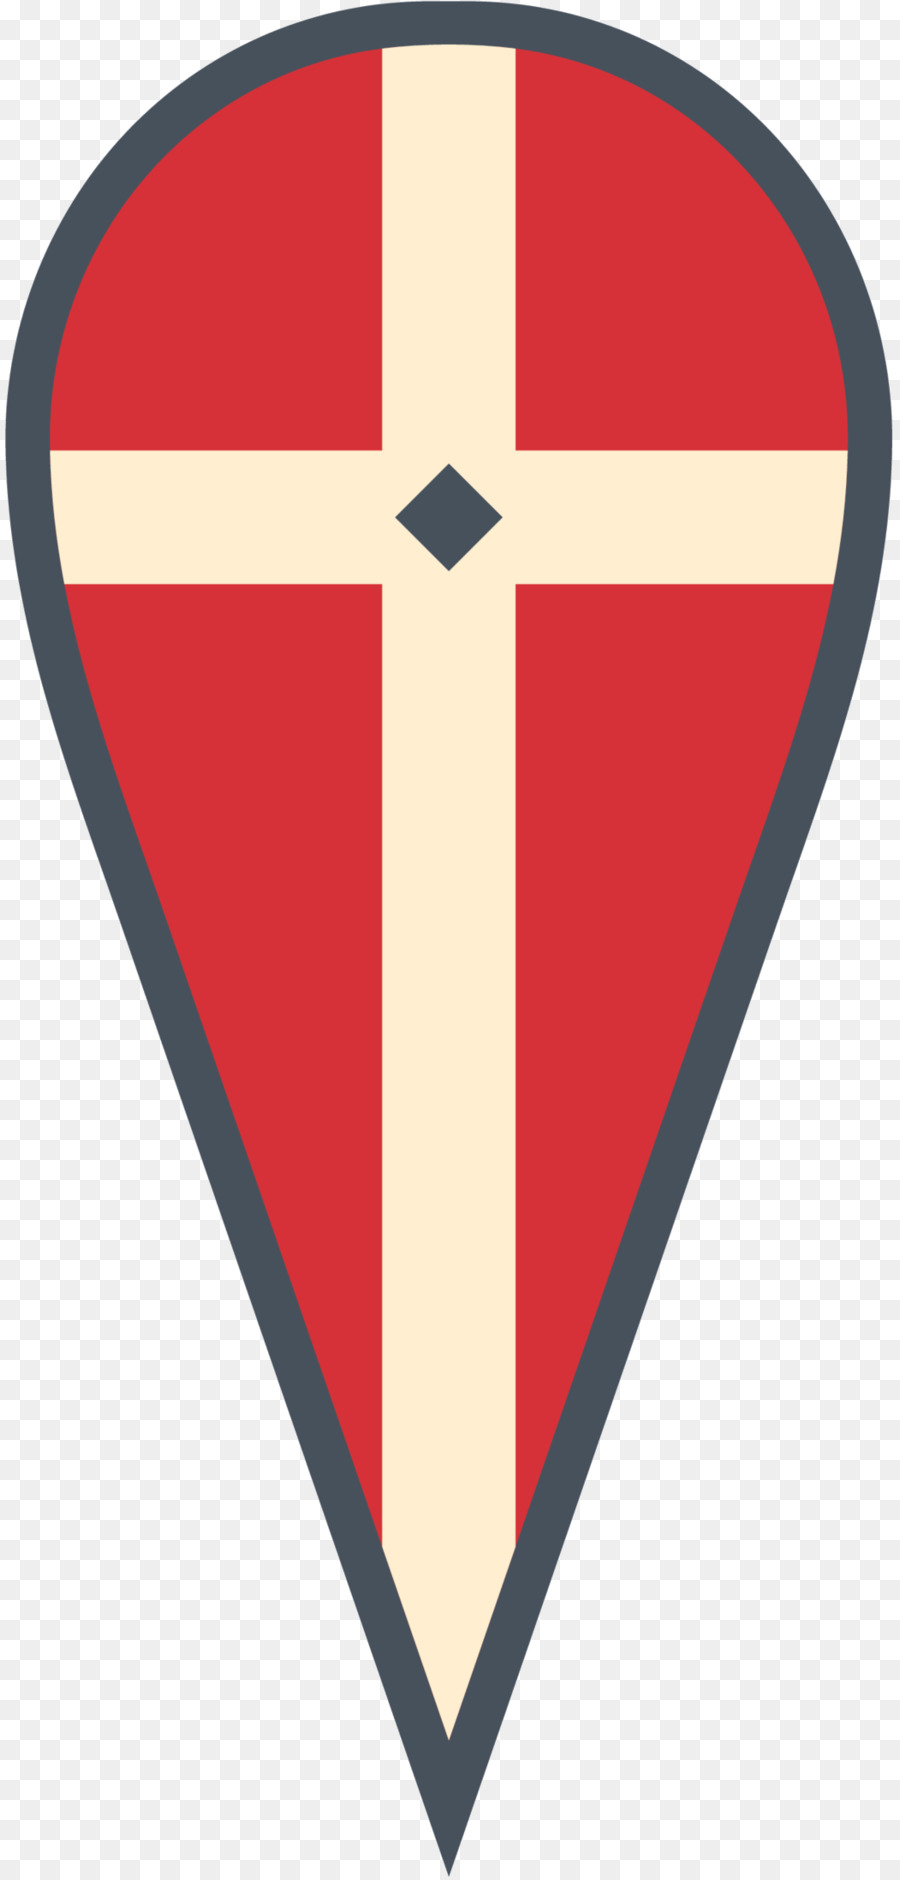 Liniensymbol Dreieck RED.M - 